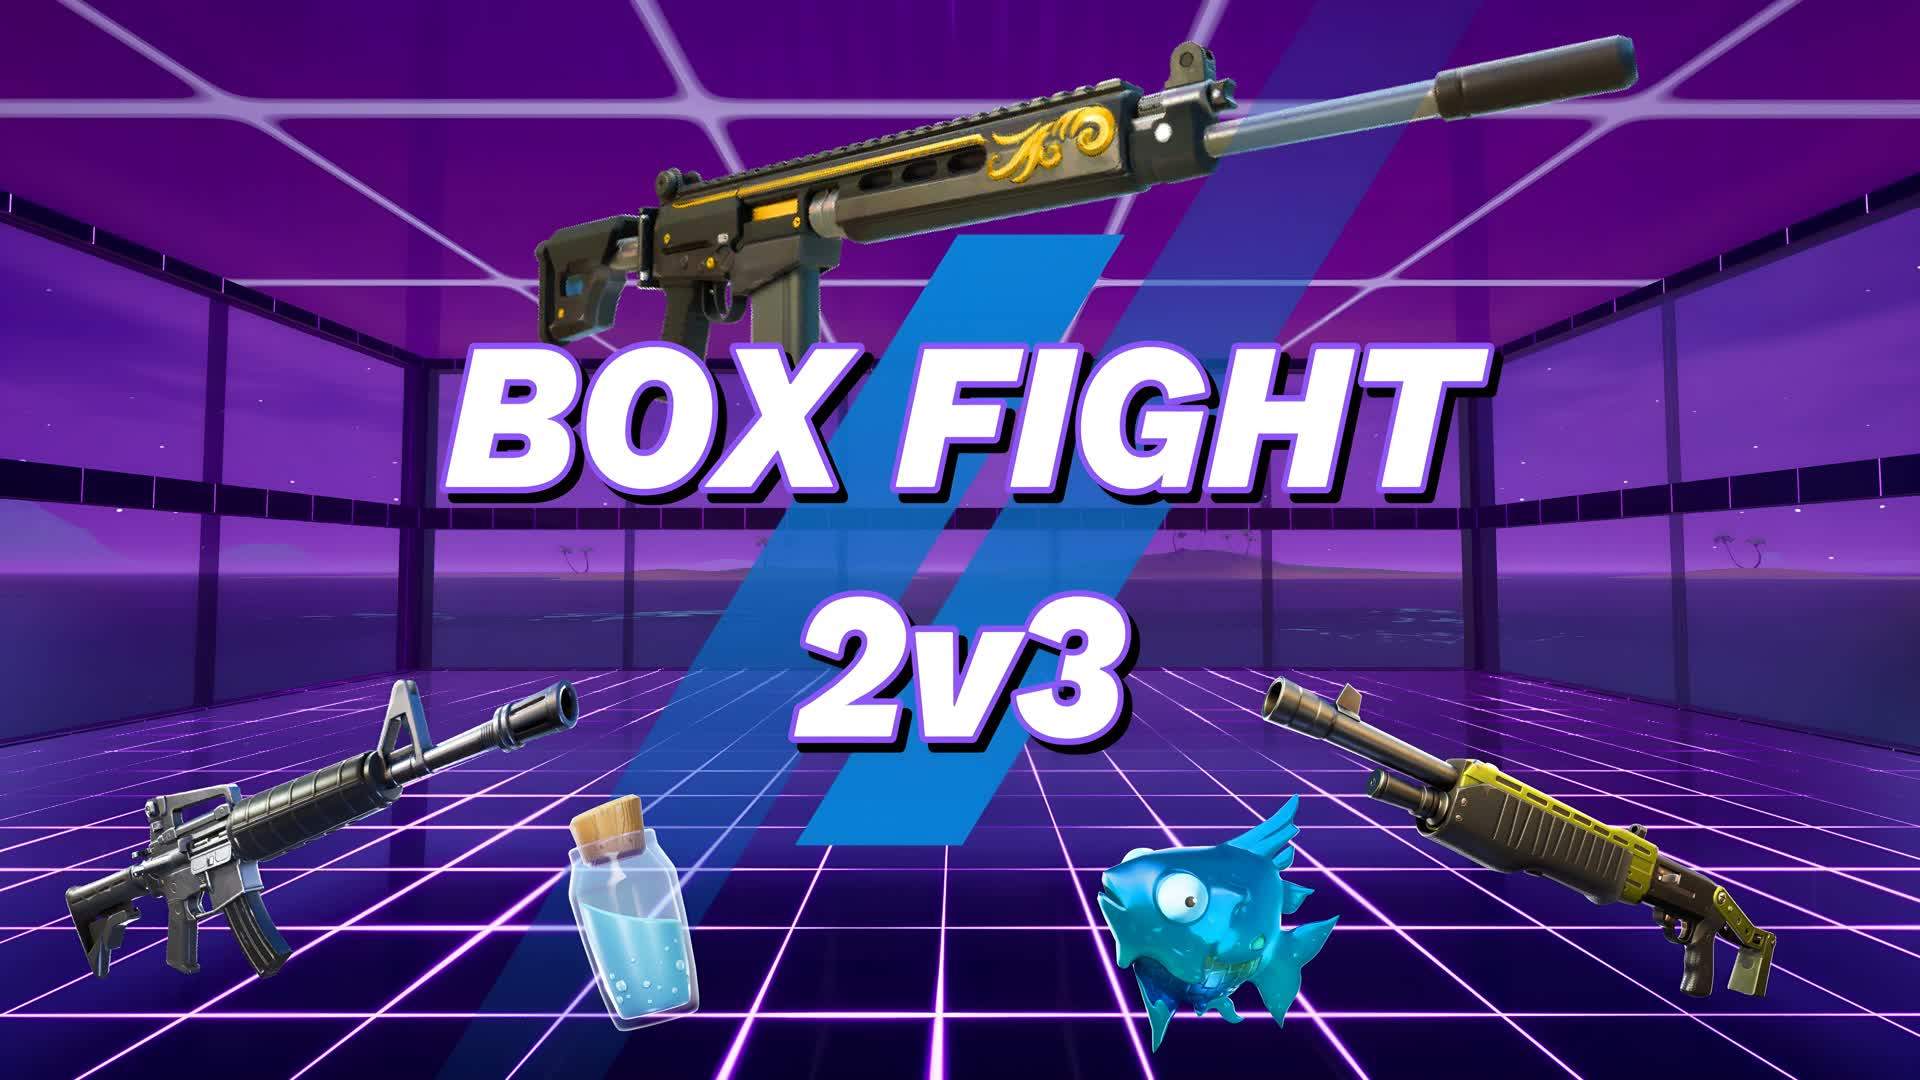 MODERN BOX FIGHT 2V3